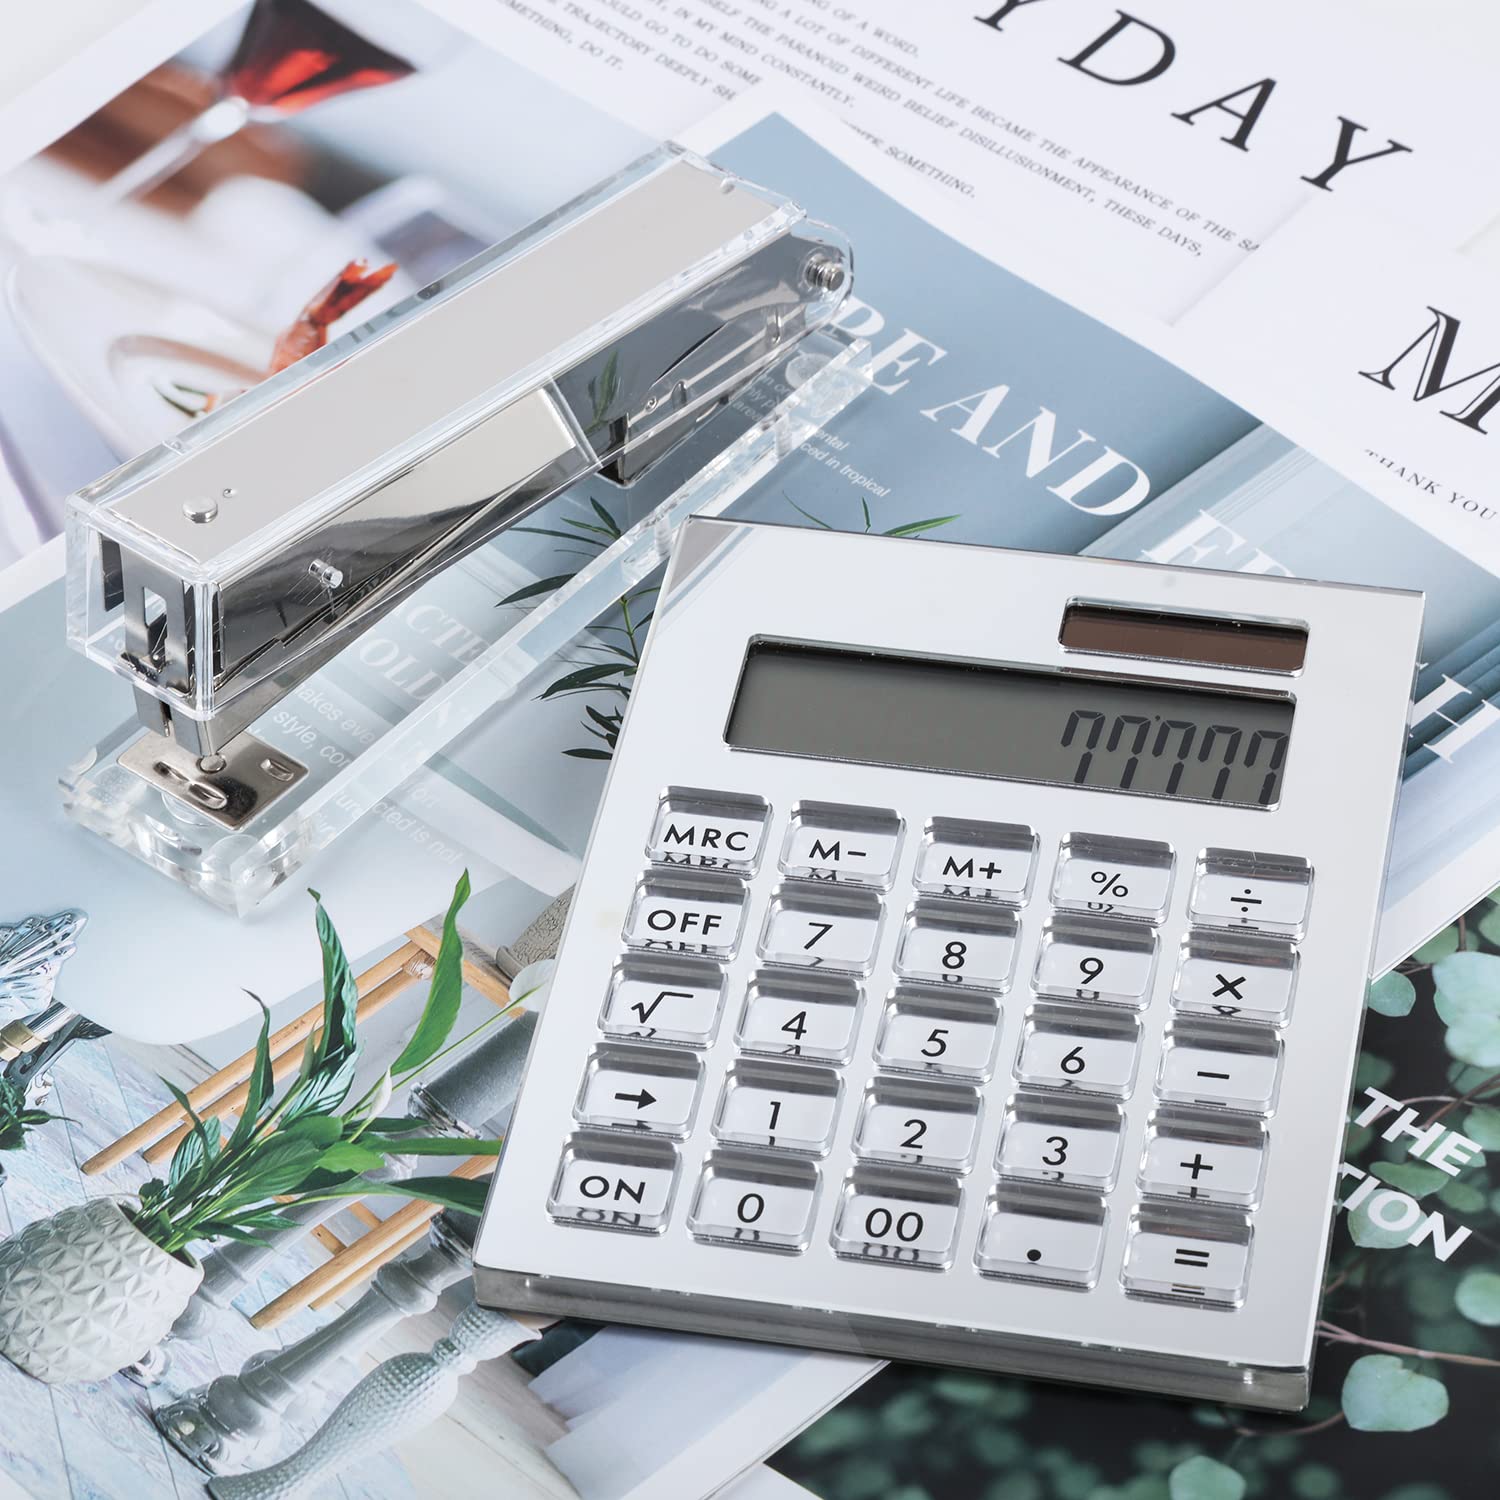 Clear Silver Acrylic Solar Power Calculator by DS DRAYMOND STORY - Home Office Desktop Calculator (12-Digit) - Business Gift Idea